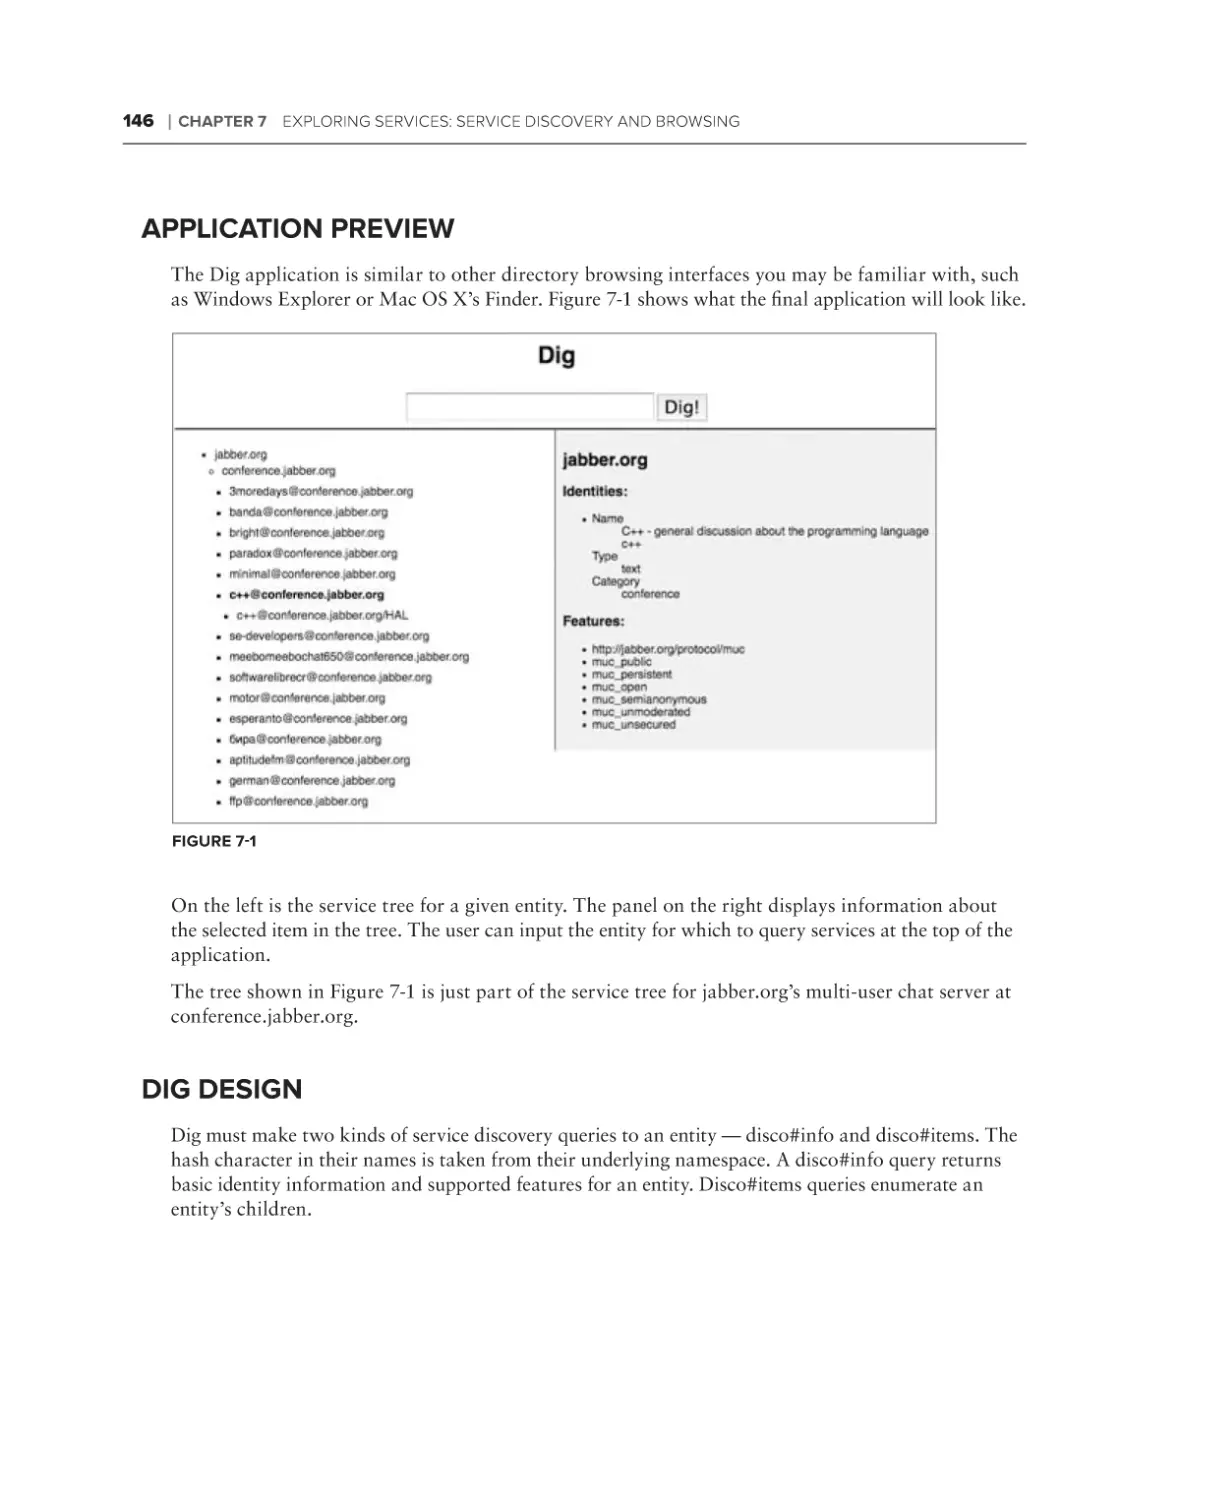 Application Preview
Dig Design